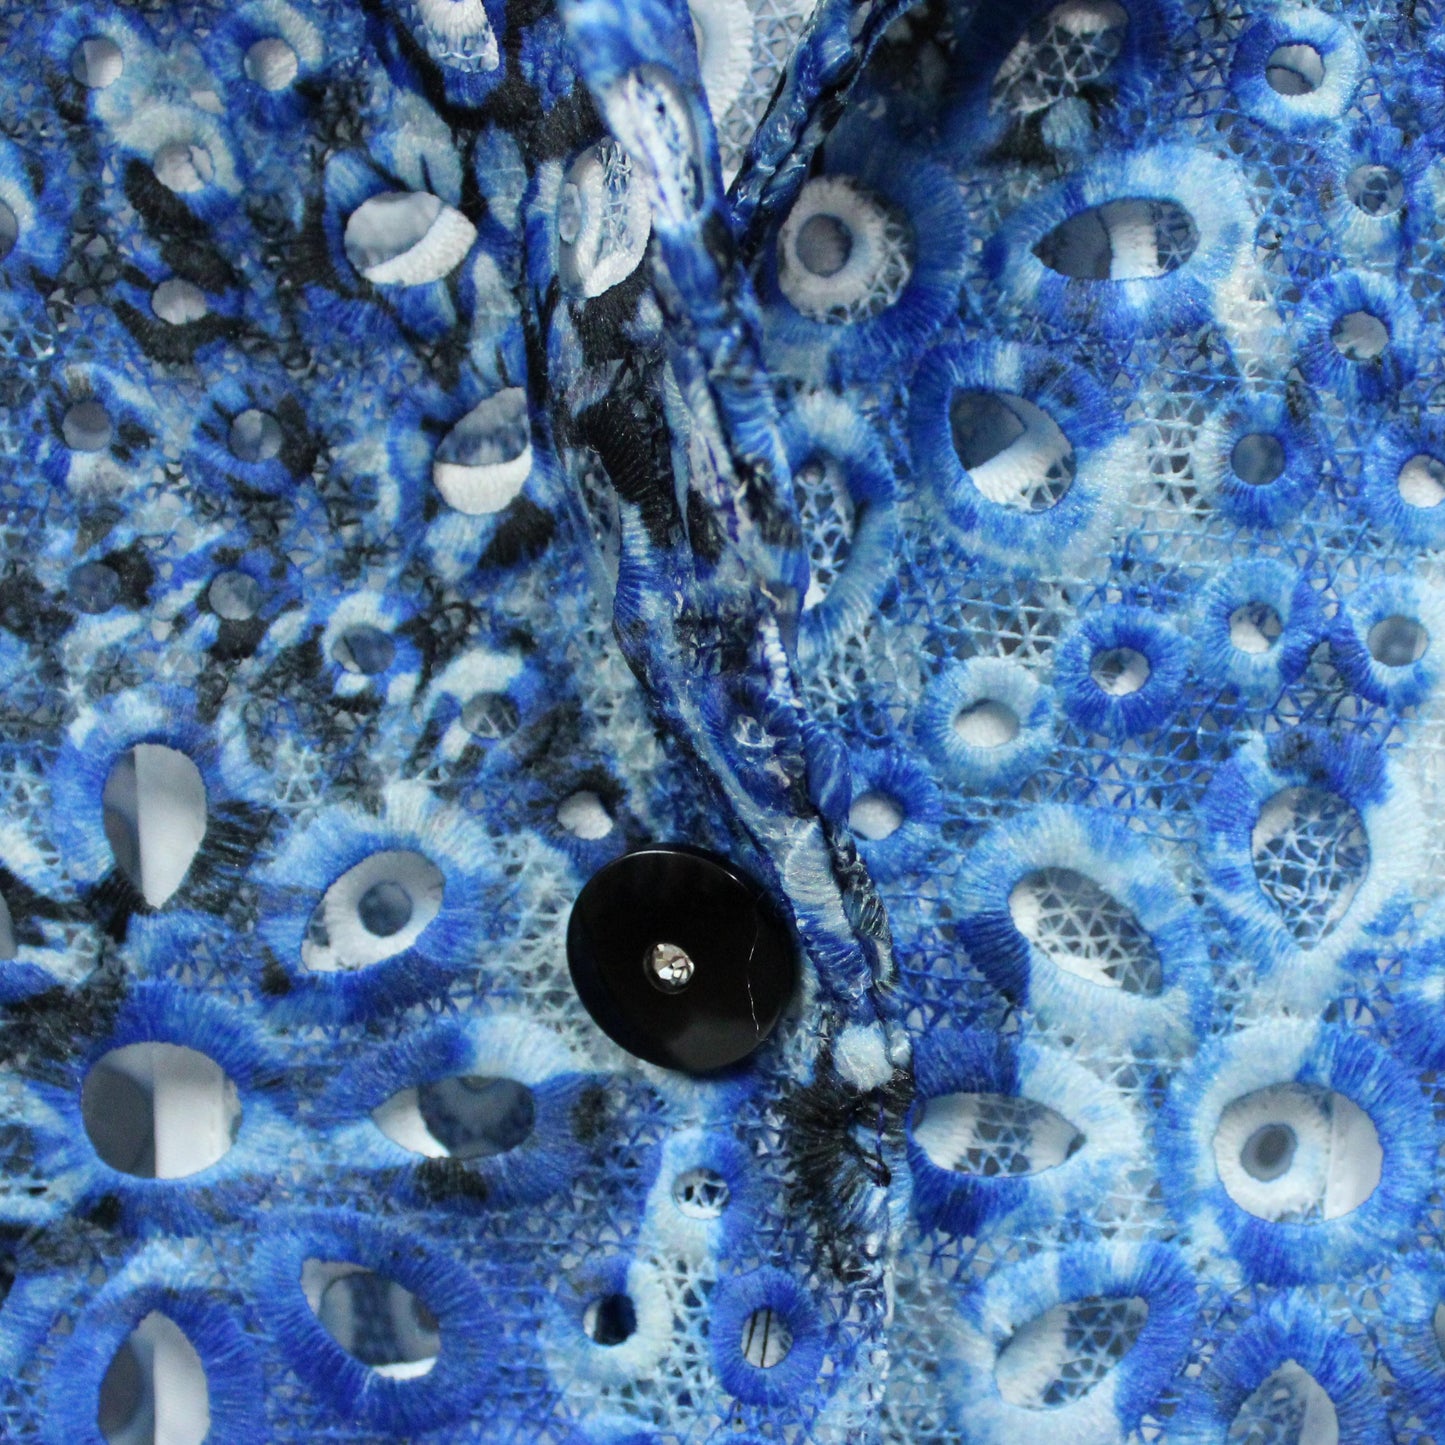 Blue Leopard Lace Blazer